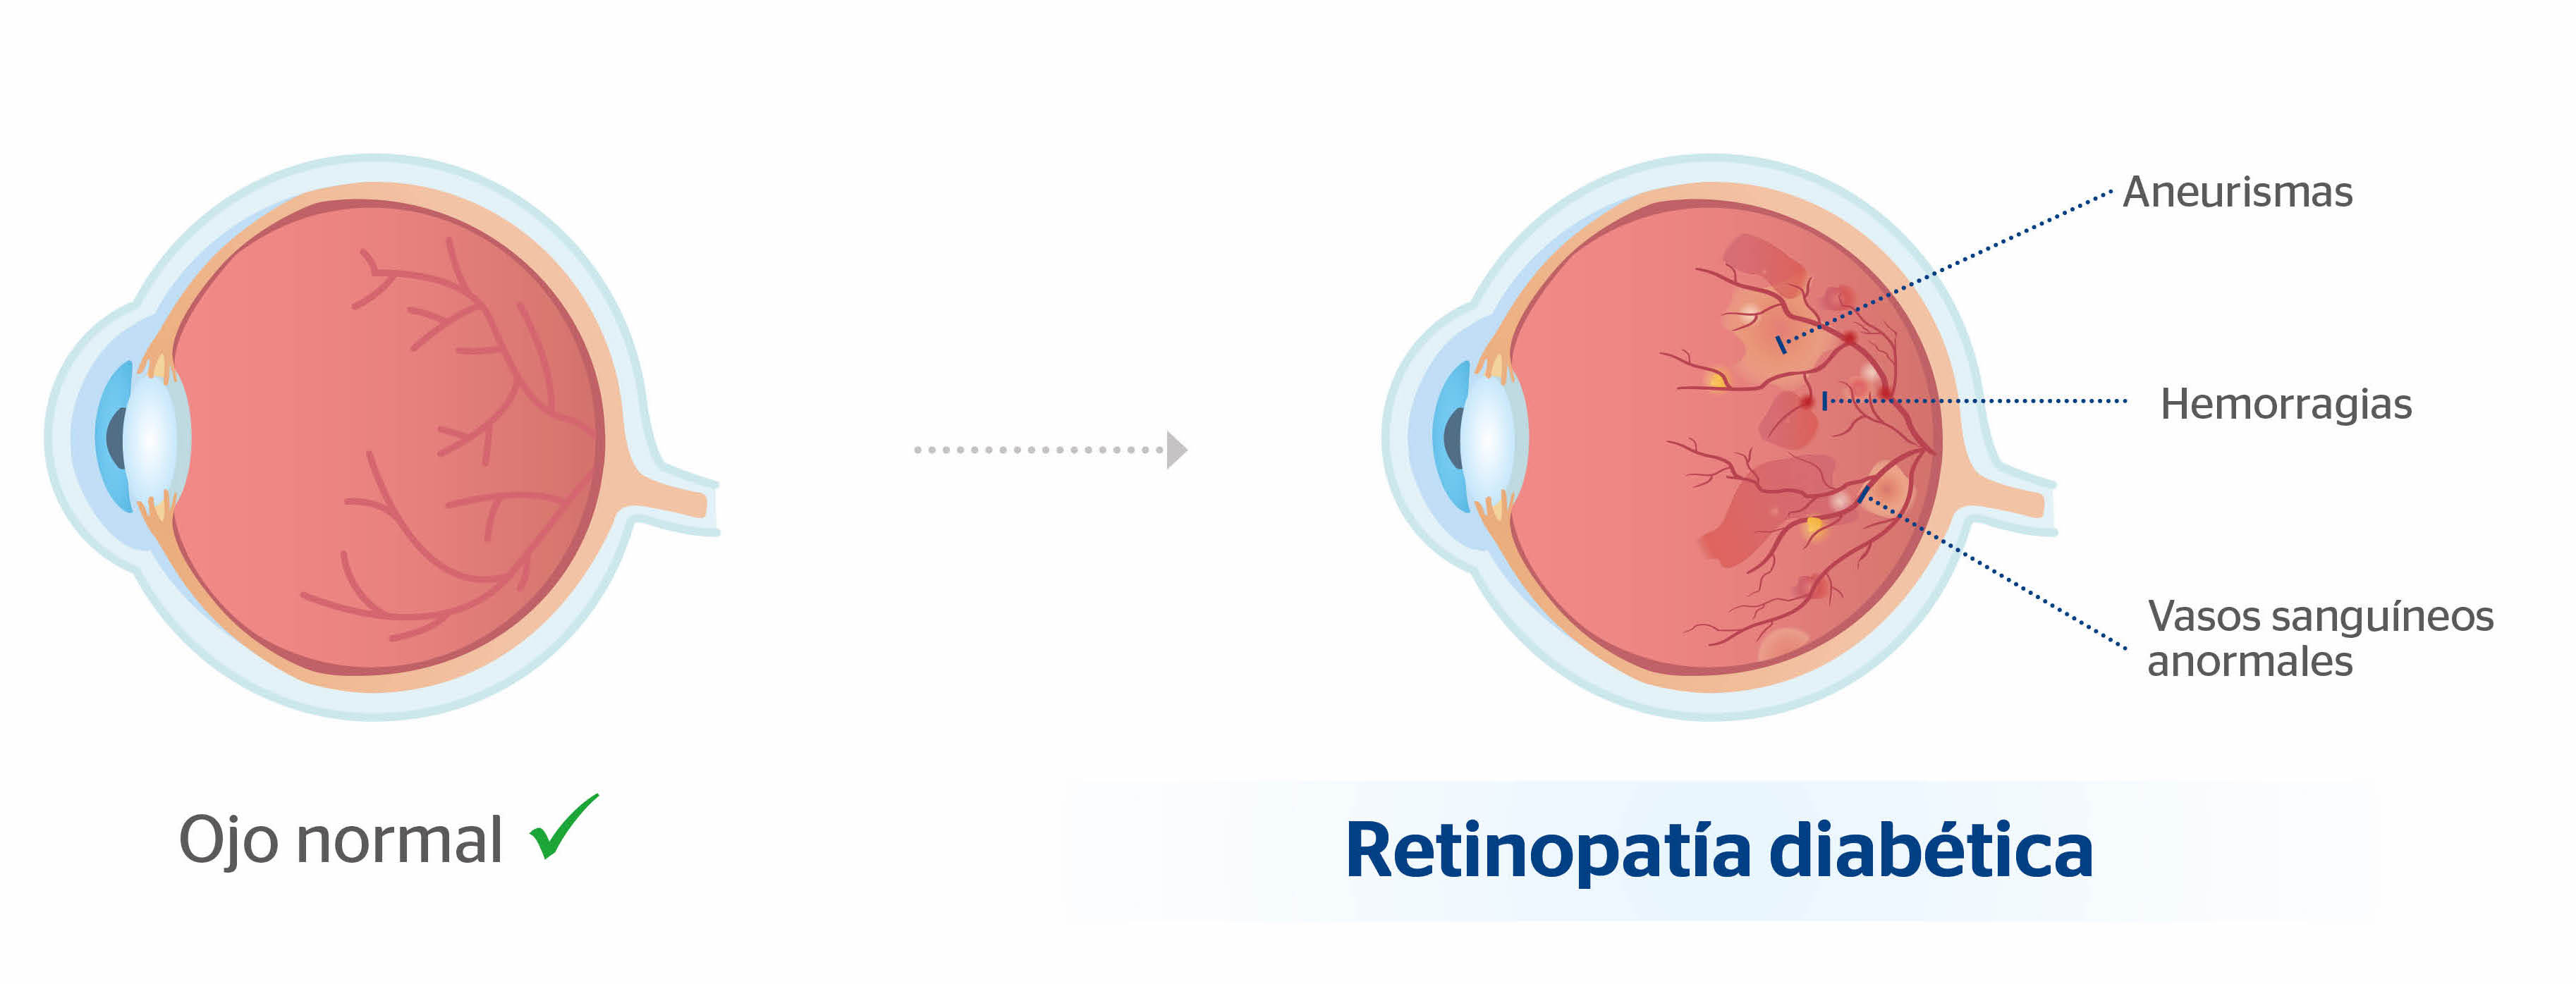 retinopatia diabetica no proliferativa sintomas)